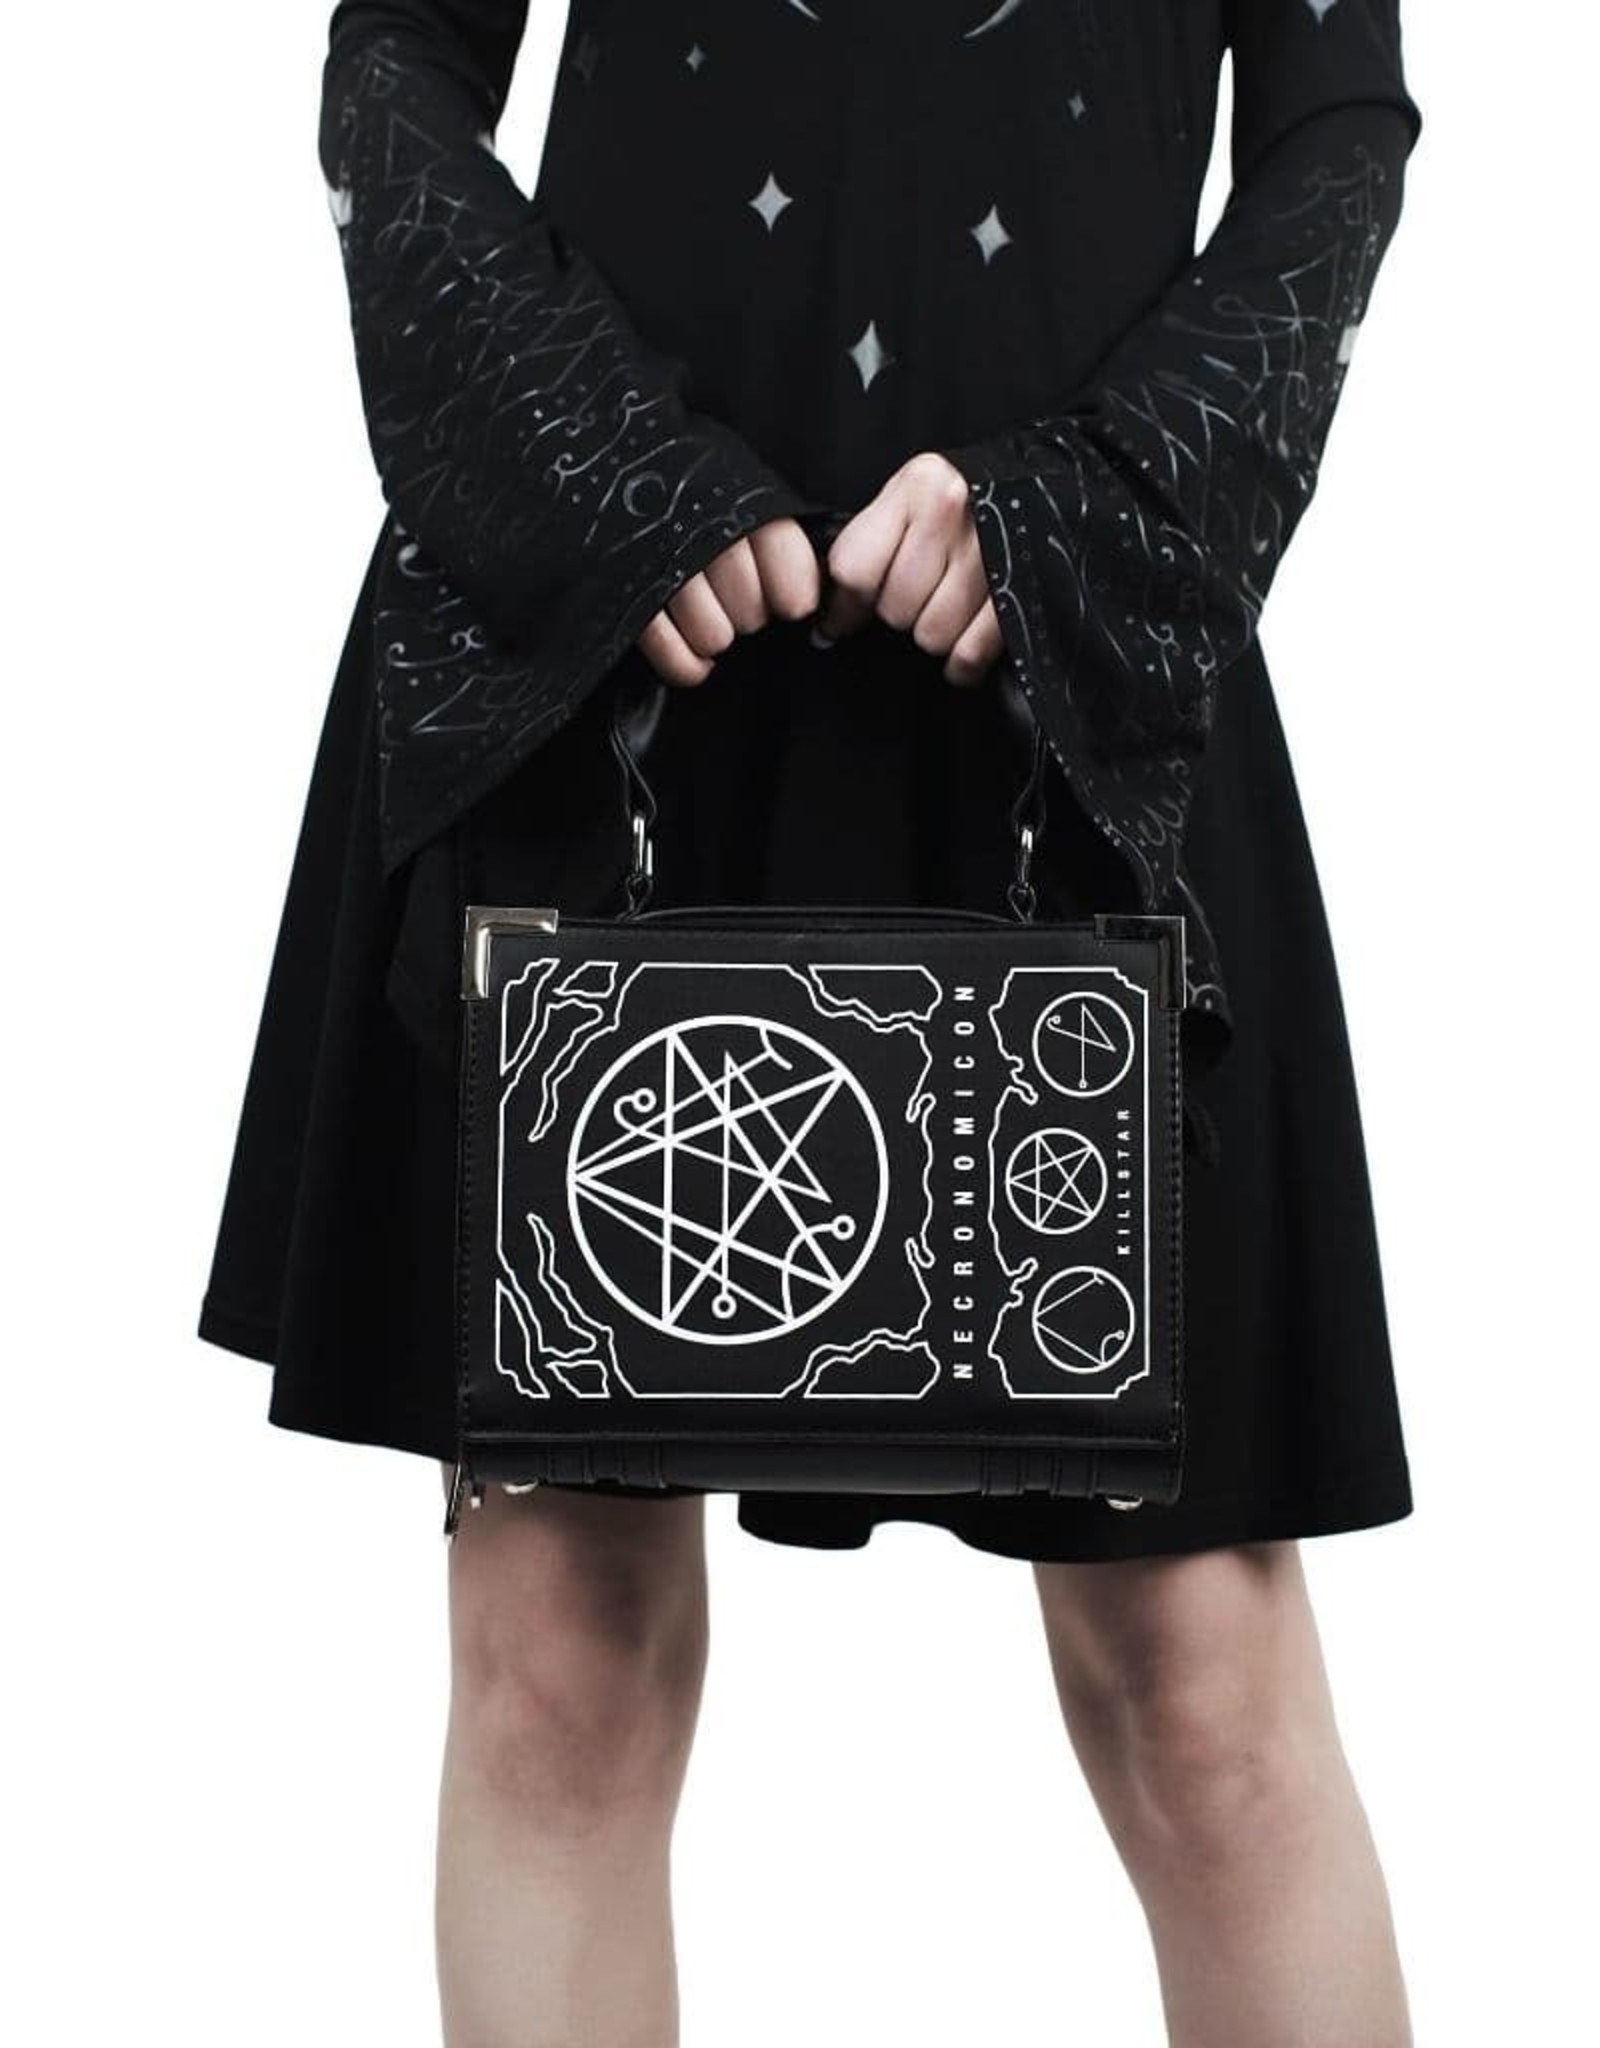 Killstar Gothic bags Steampunk bags - Killstar Necronomicon handbag